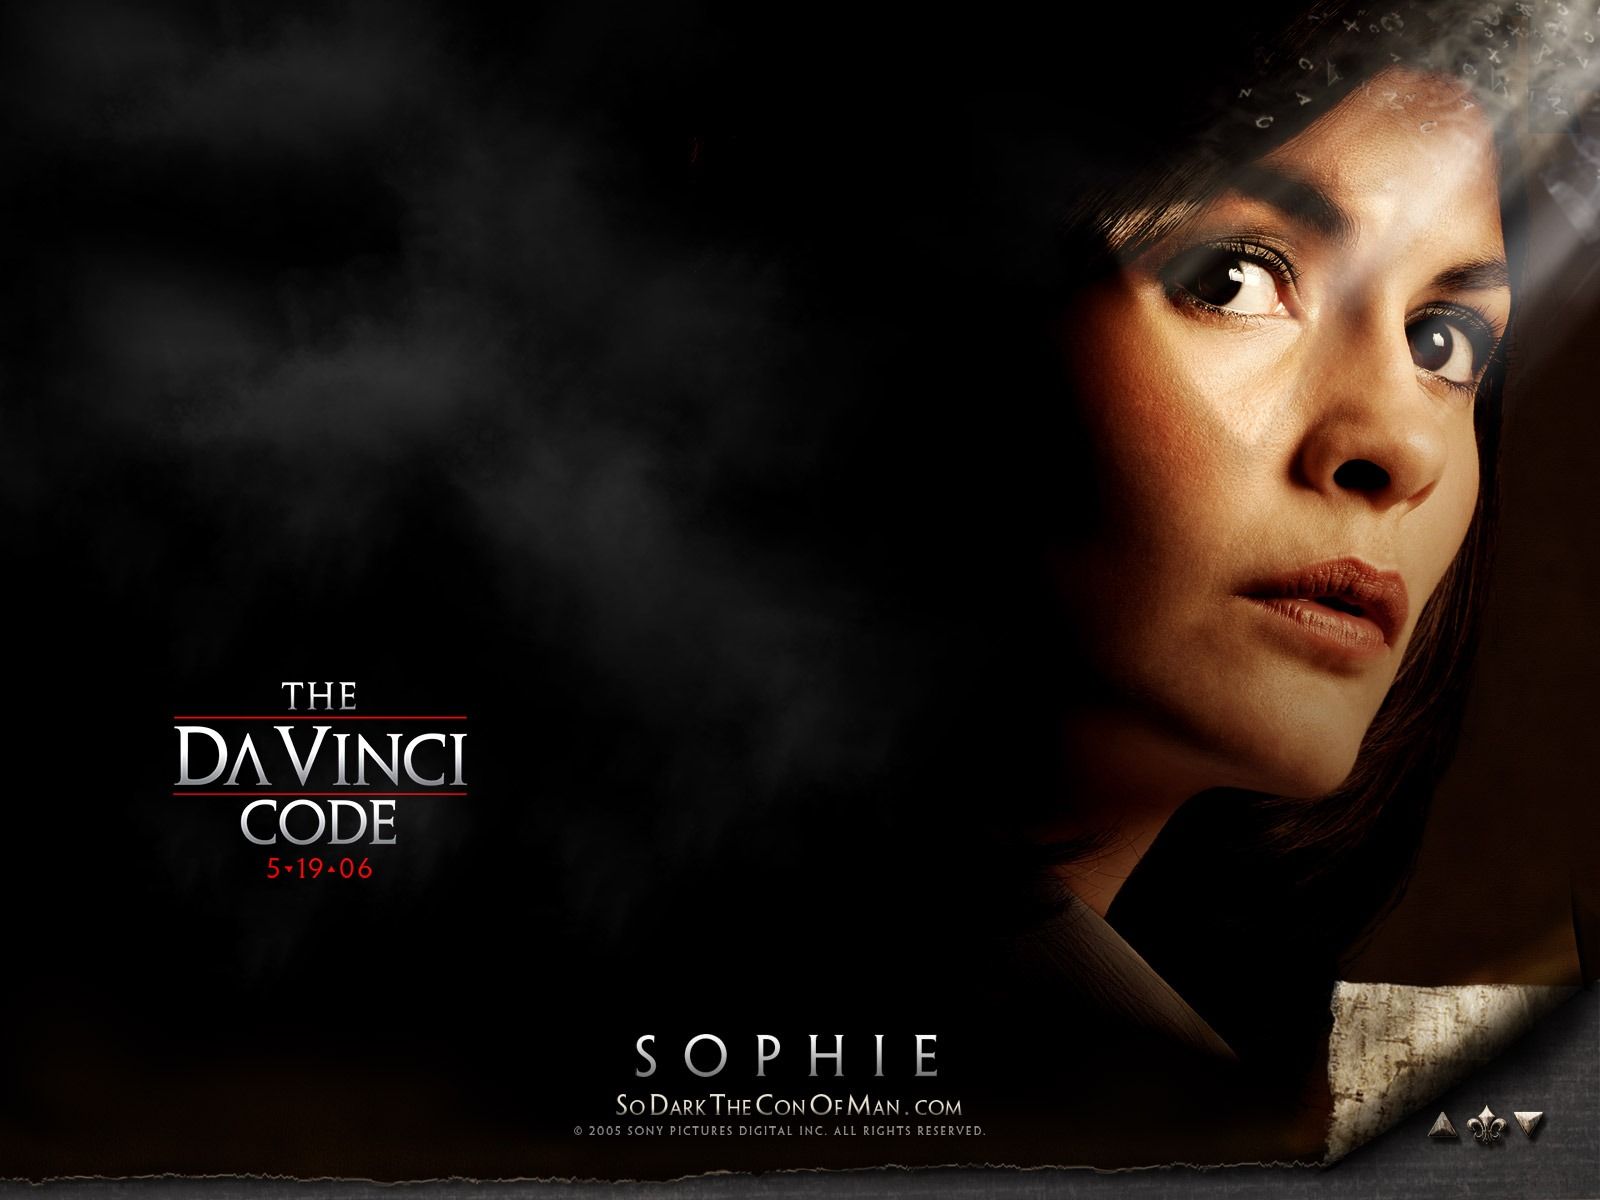 Sophie Wallpaper The Da Vinci Code Movies Wallpaper in jpg format for free download